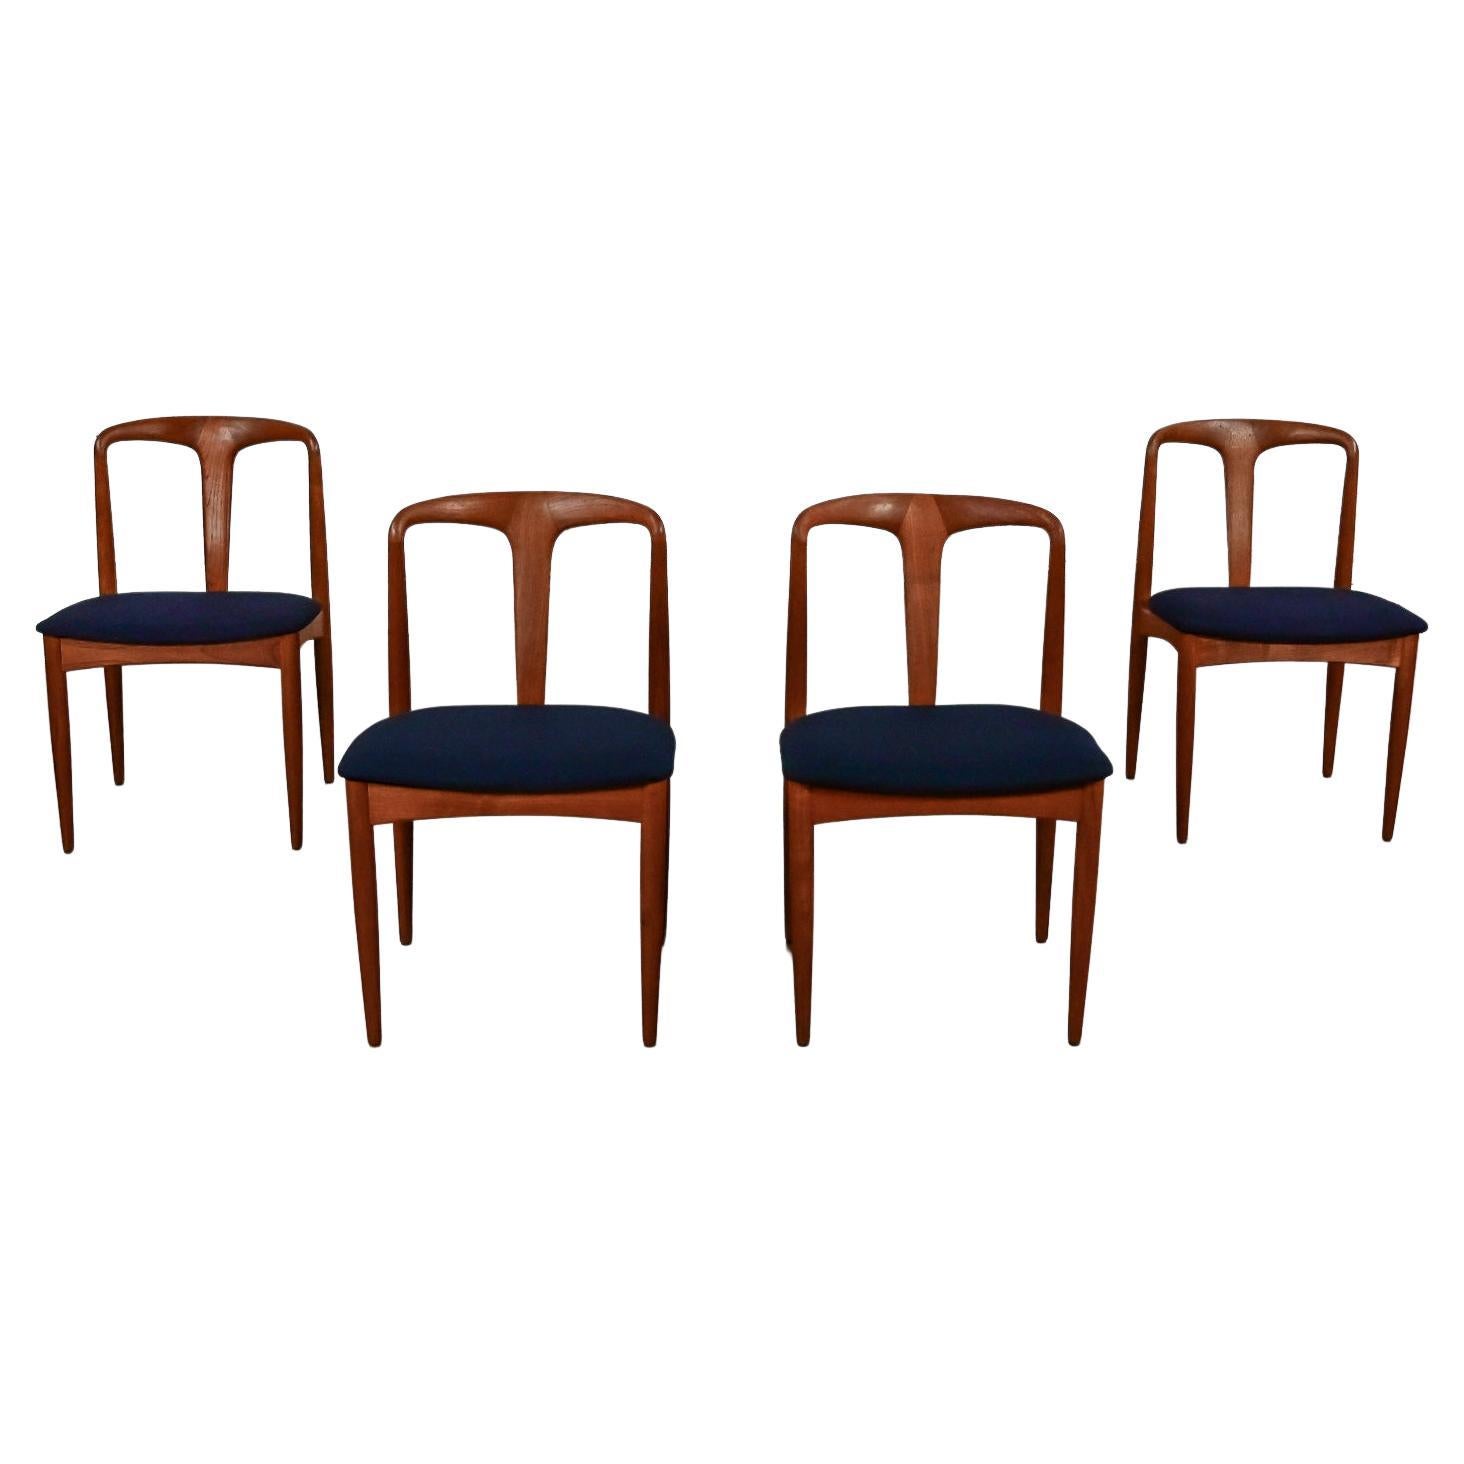 4 Scandinavian Modern Teak Juliane Dining Chairs Attributed to Johannes Andersen For Sale